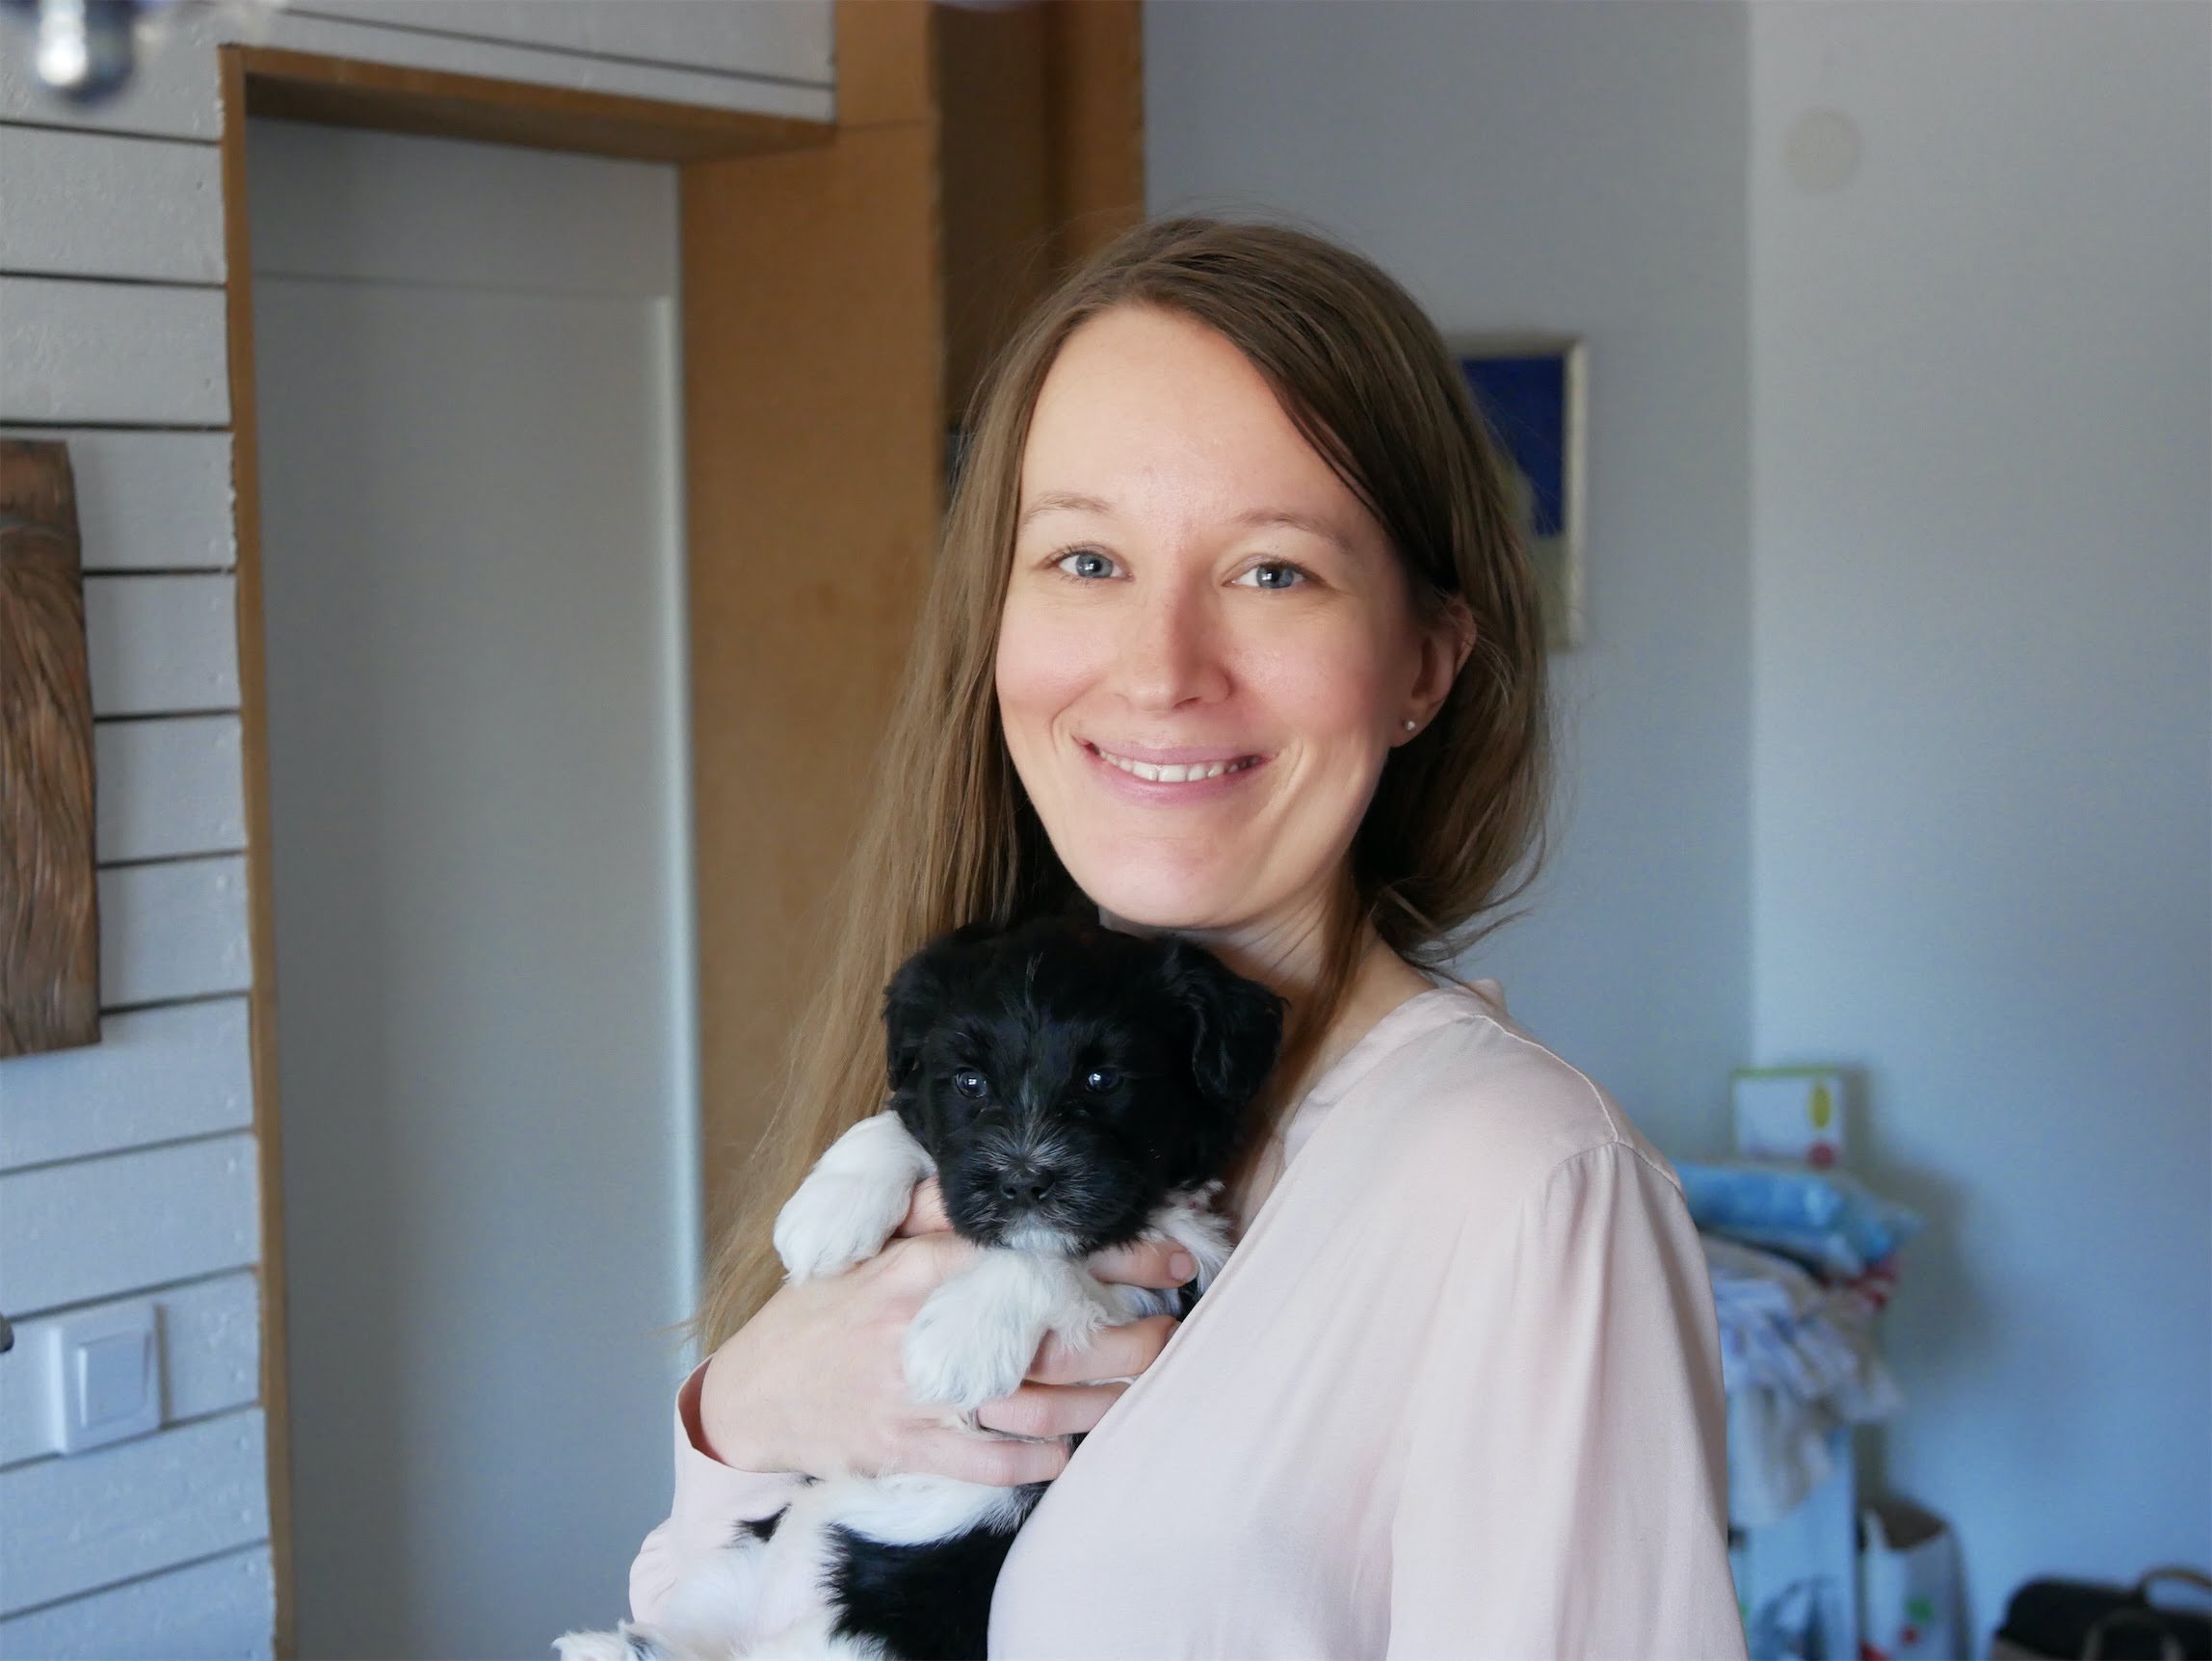 Femke de Grijs with a Schapendoes puppy of 5 weeks